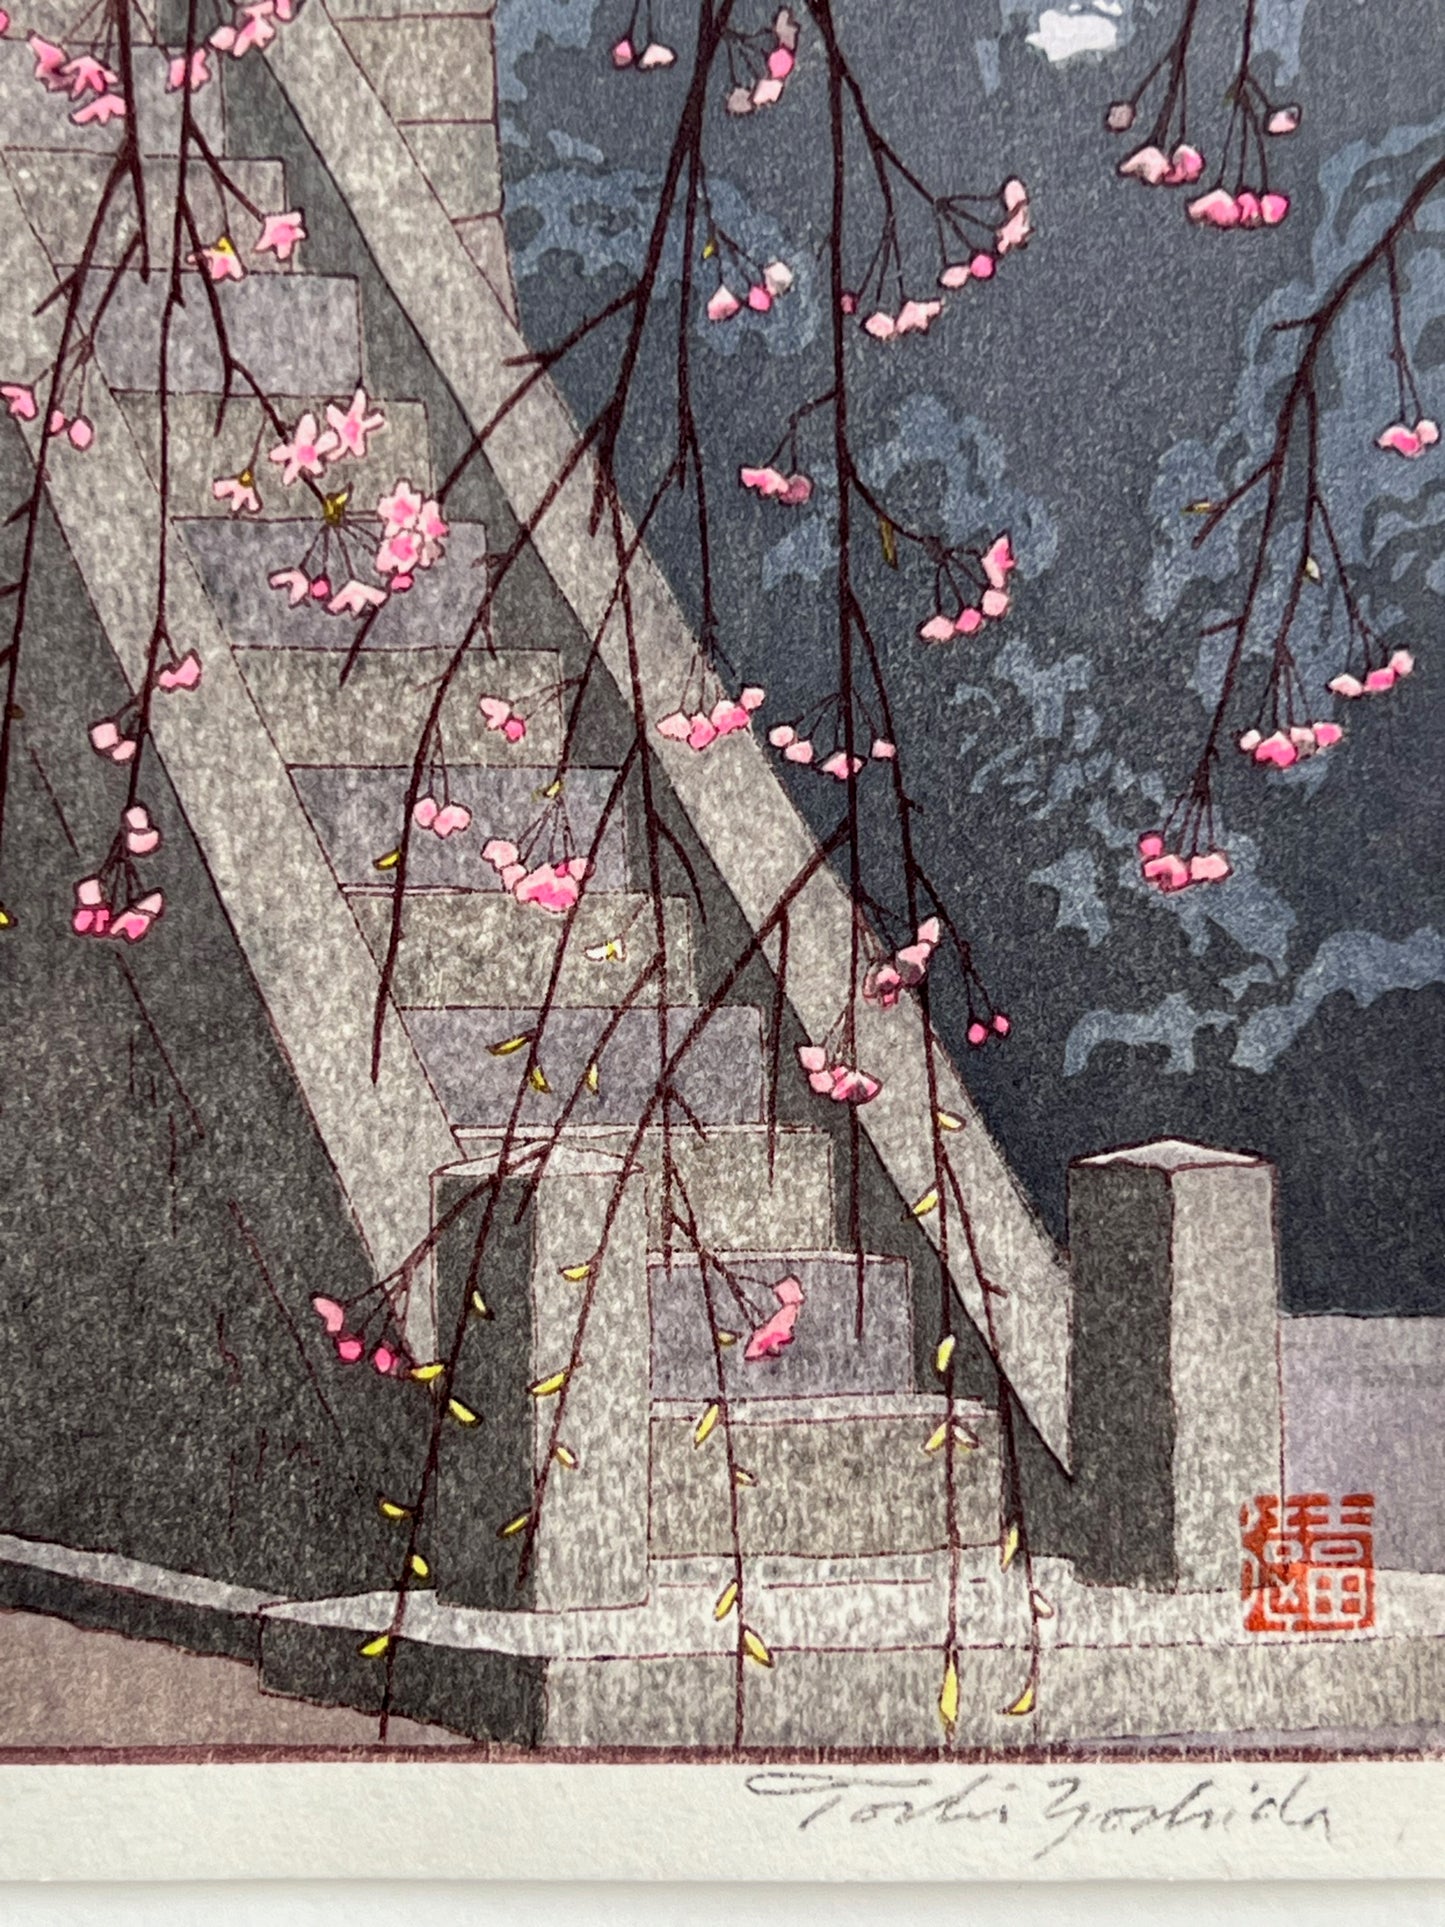 estampe japonaise de yoshida toshi cloche du temple heirinji au printemps arbre en fleurs,, signature de l'artiste